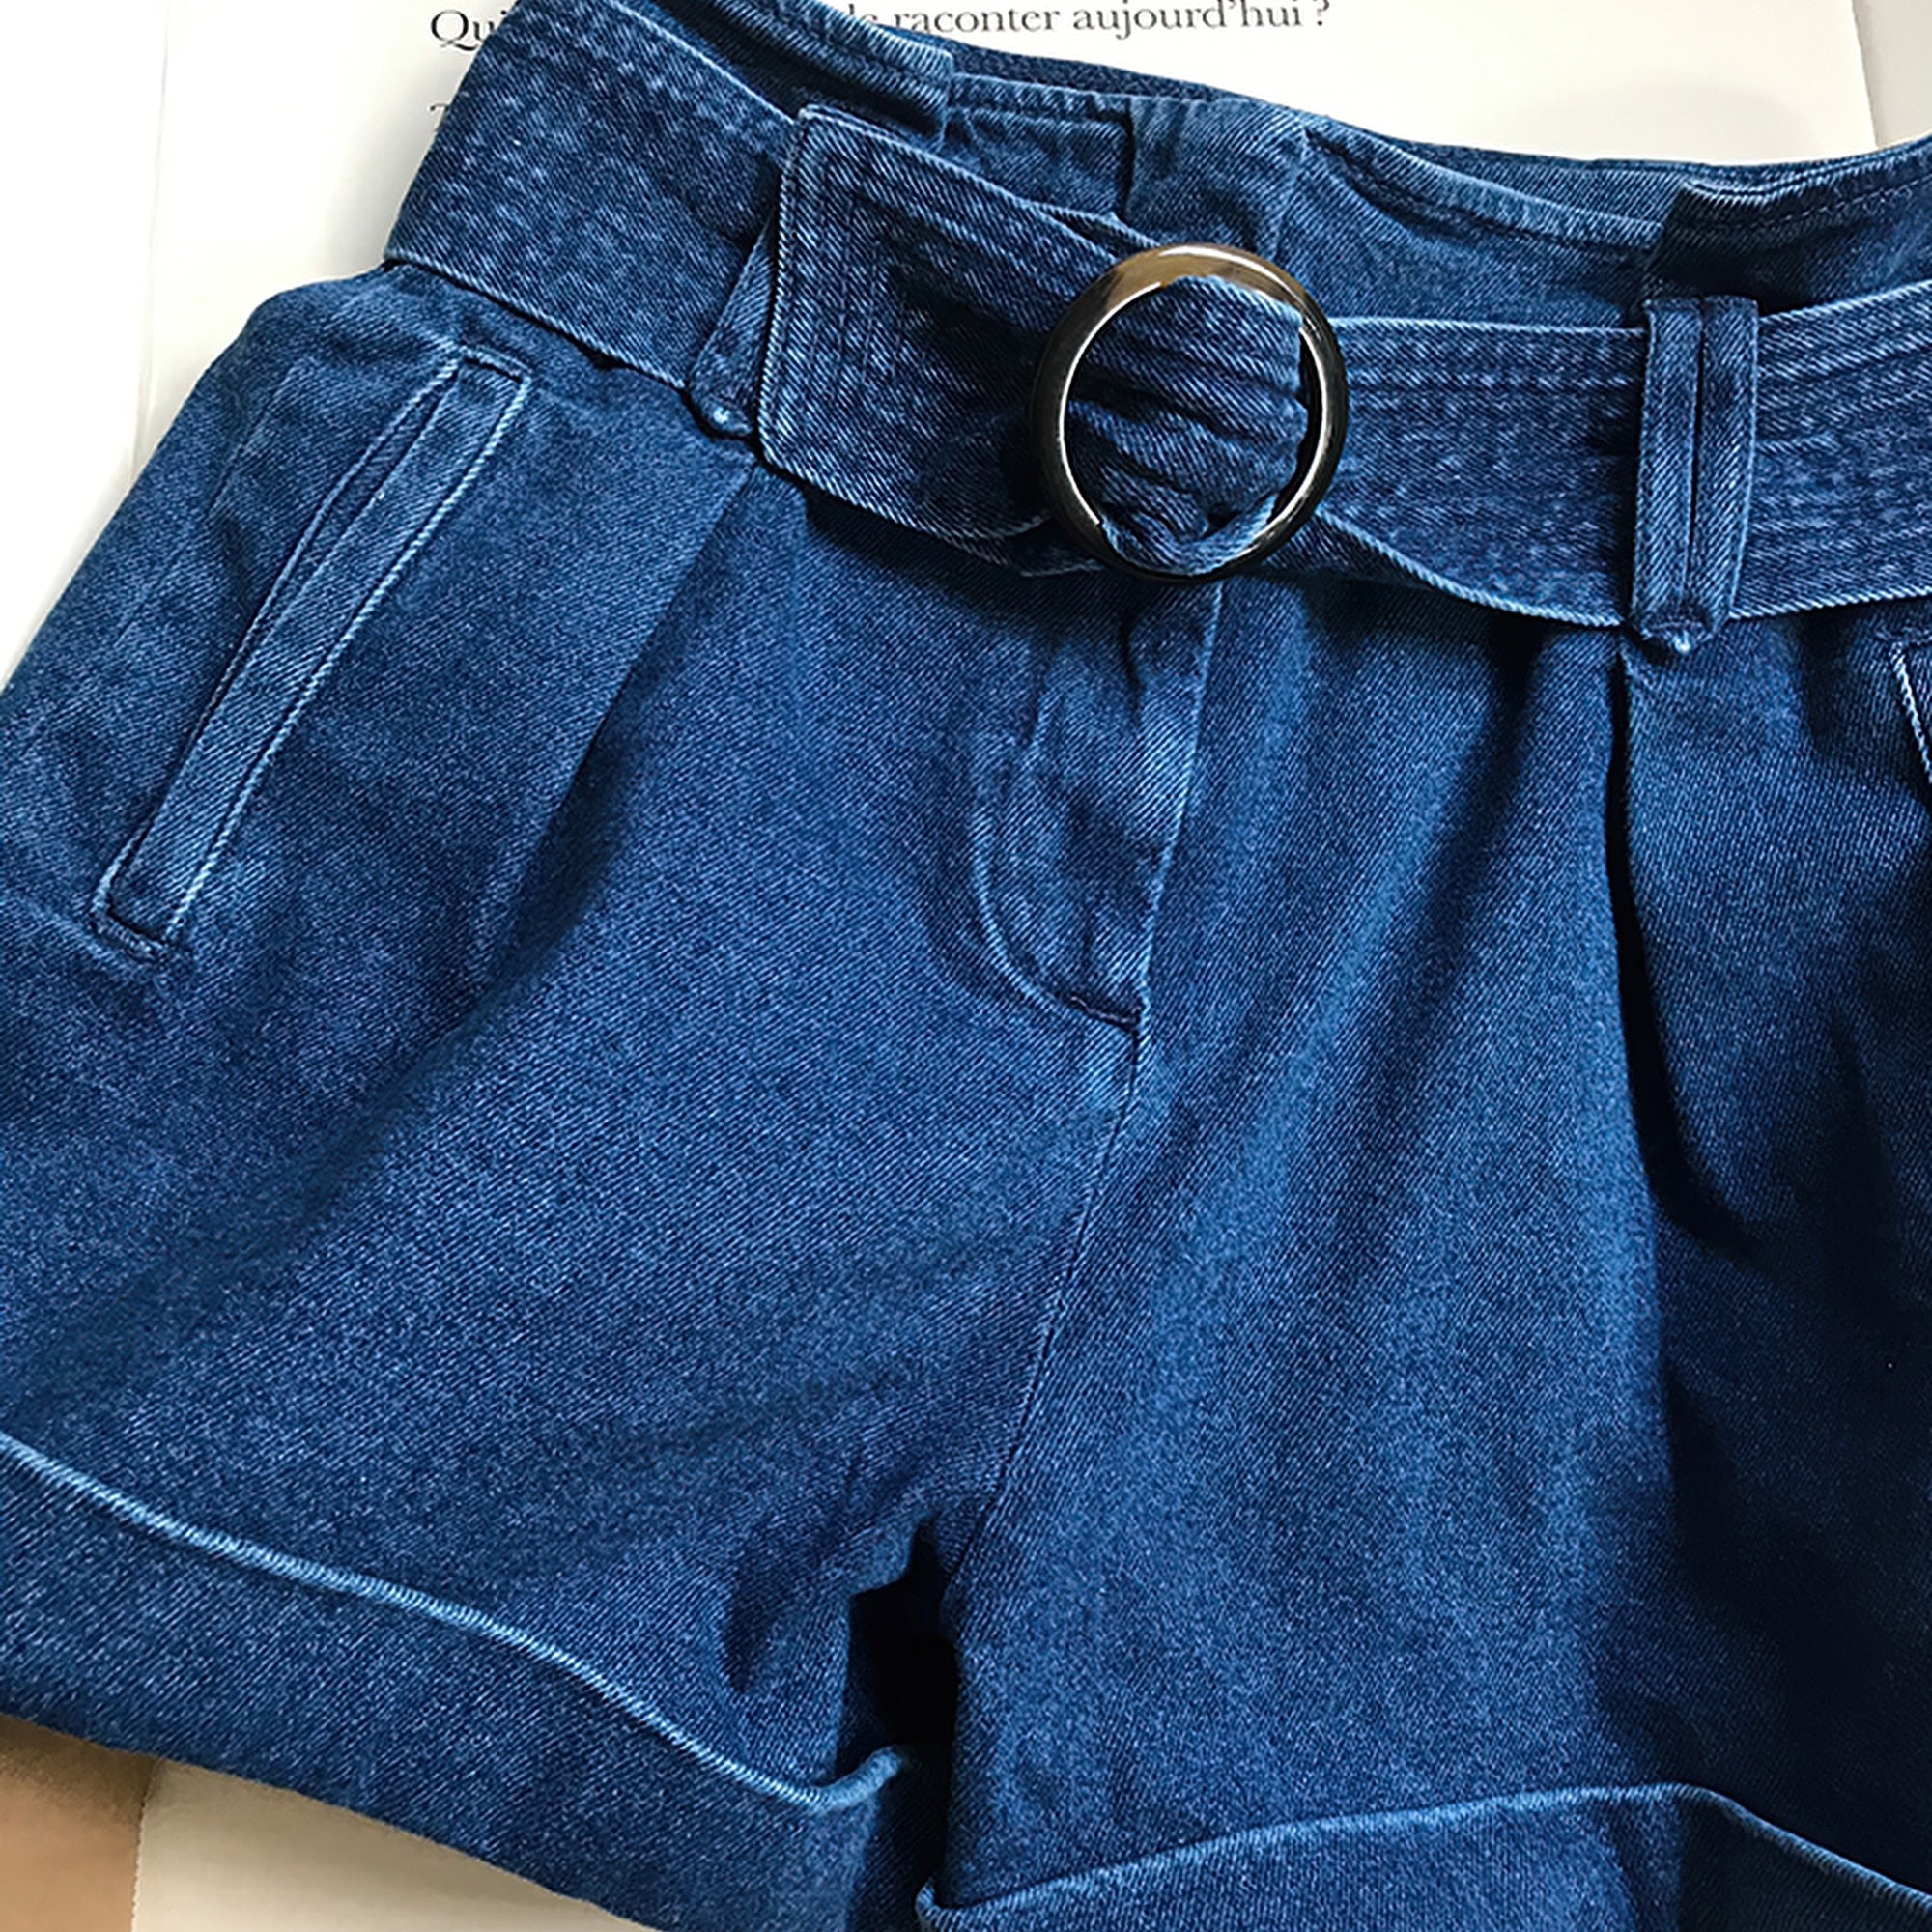 Clacive Rulen High Waist Jean Shorts Women Summer Loose Casual Short Jeans New  All-Match Ladies Denim Short Pants